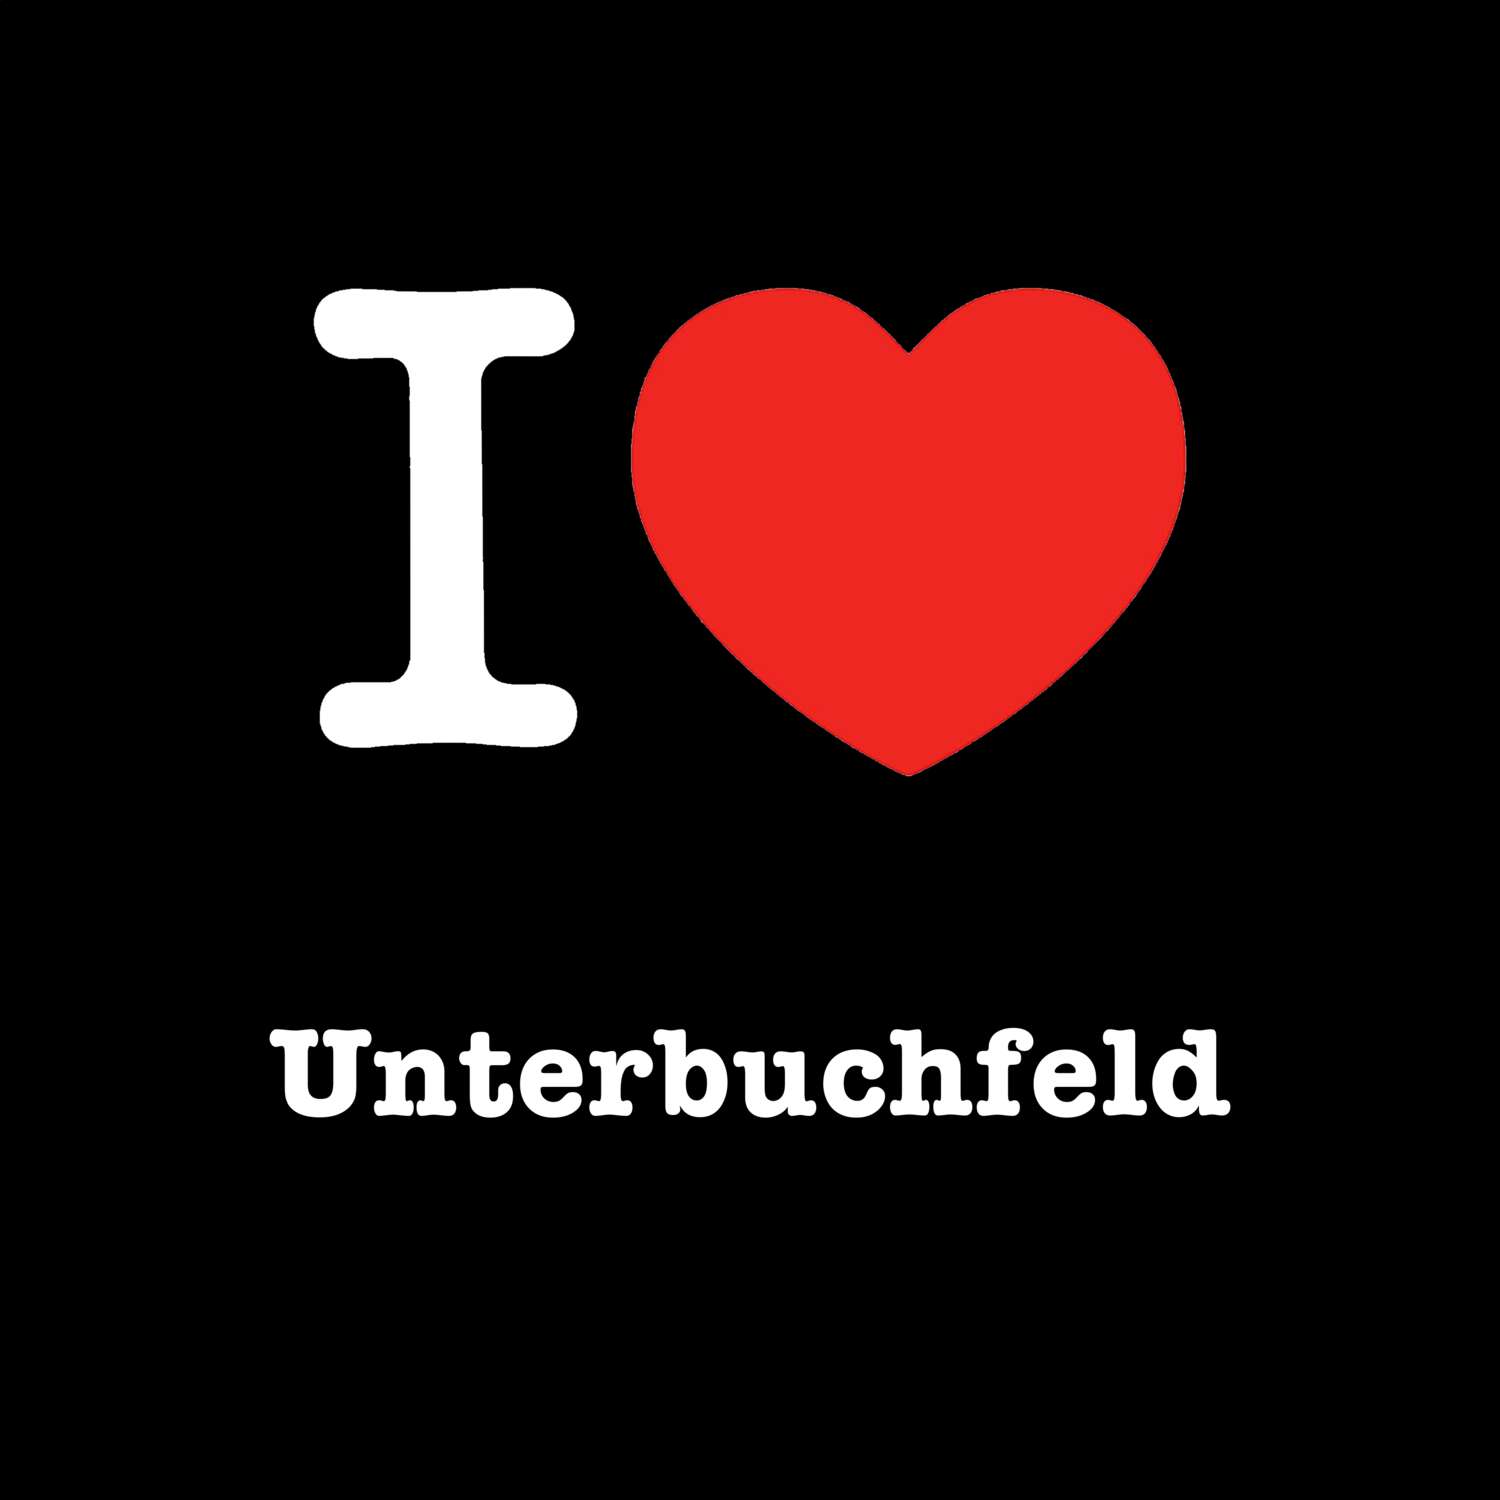 Unterbuchfeld T-Shirt »I love«